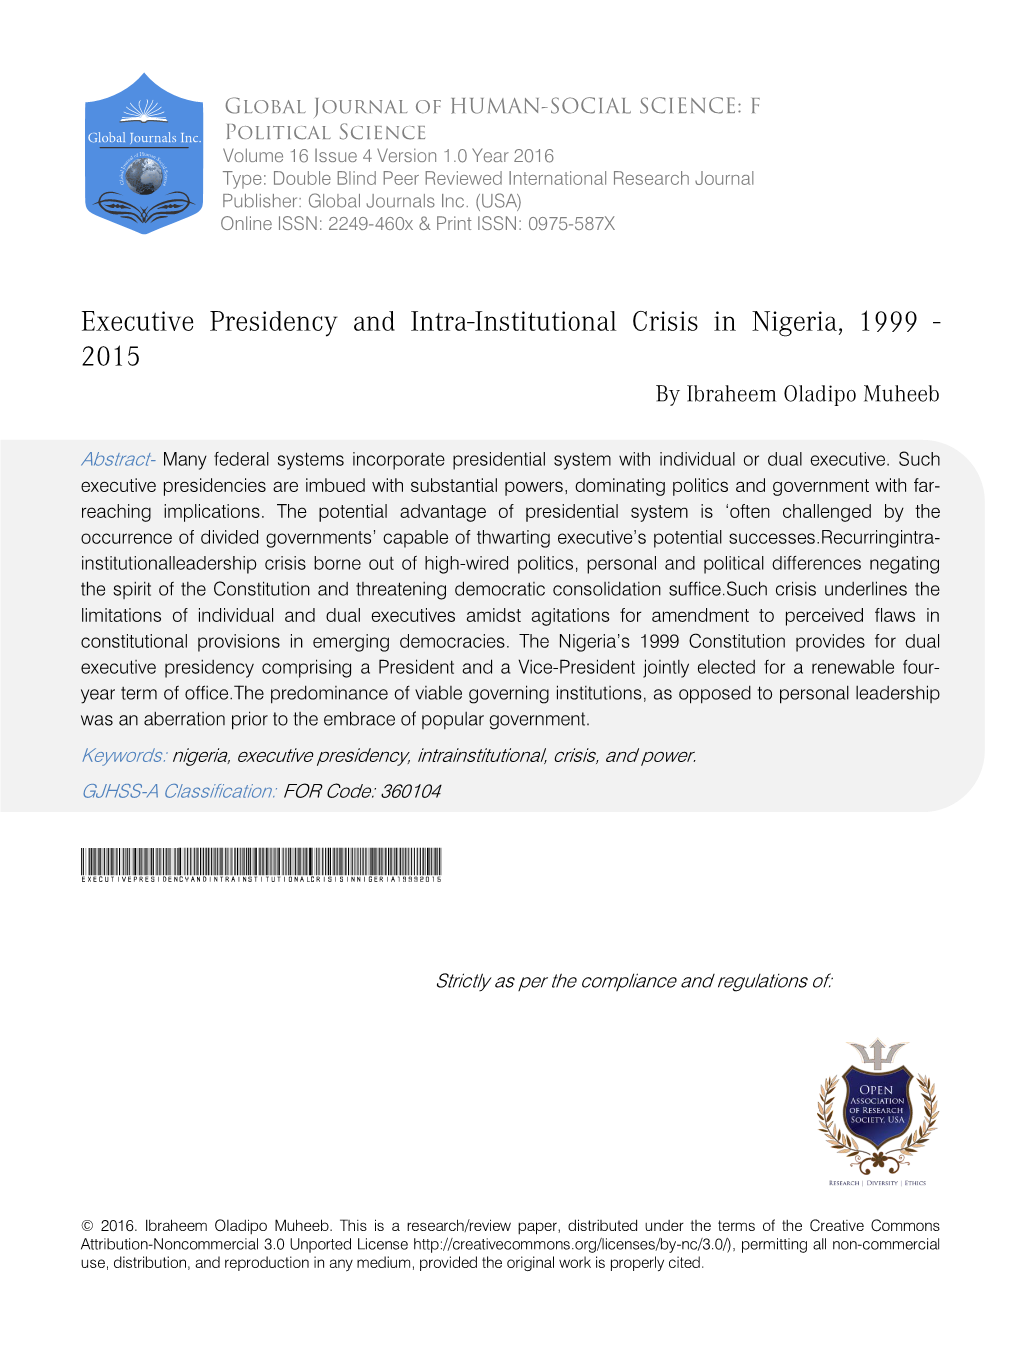 Executive Presidency and Intra-Institutional Crisis in Nigeria, 1999 - 2015 by Ibraheem Oladipo Muheeb